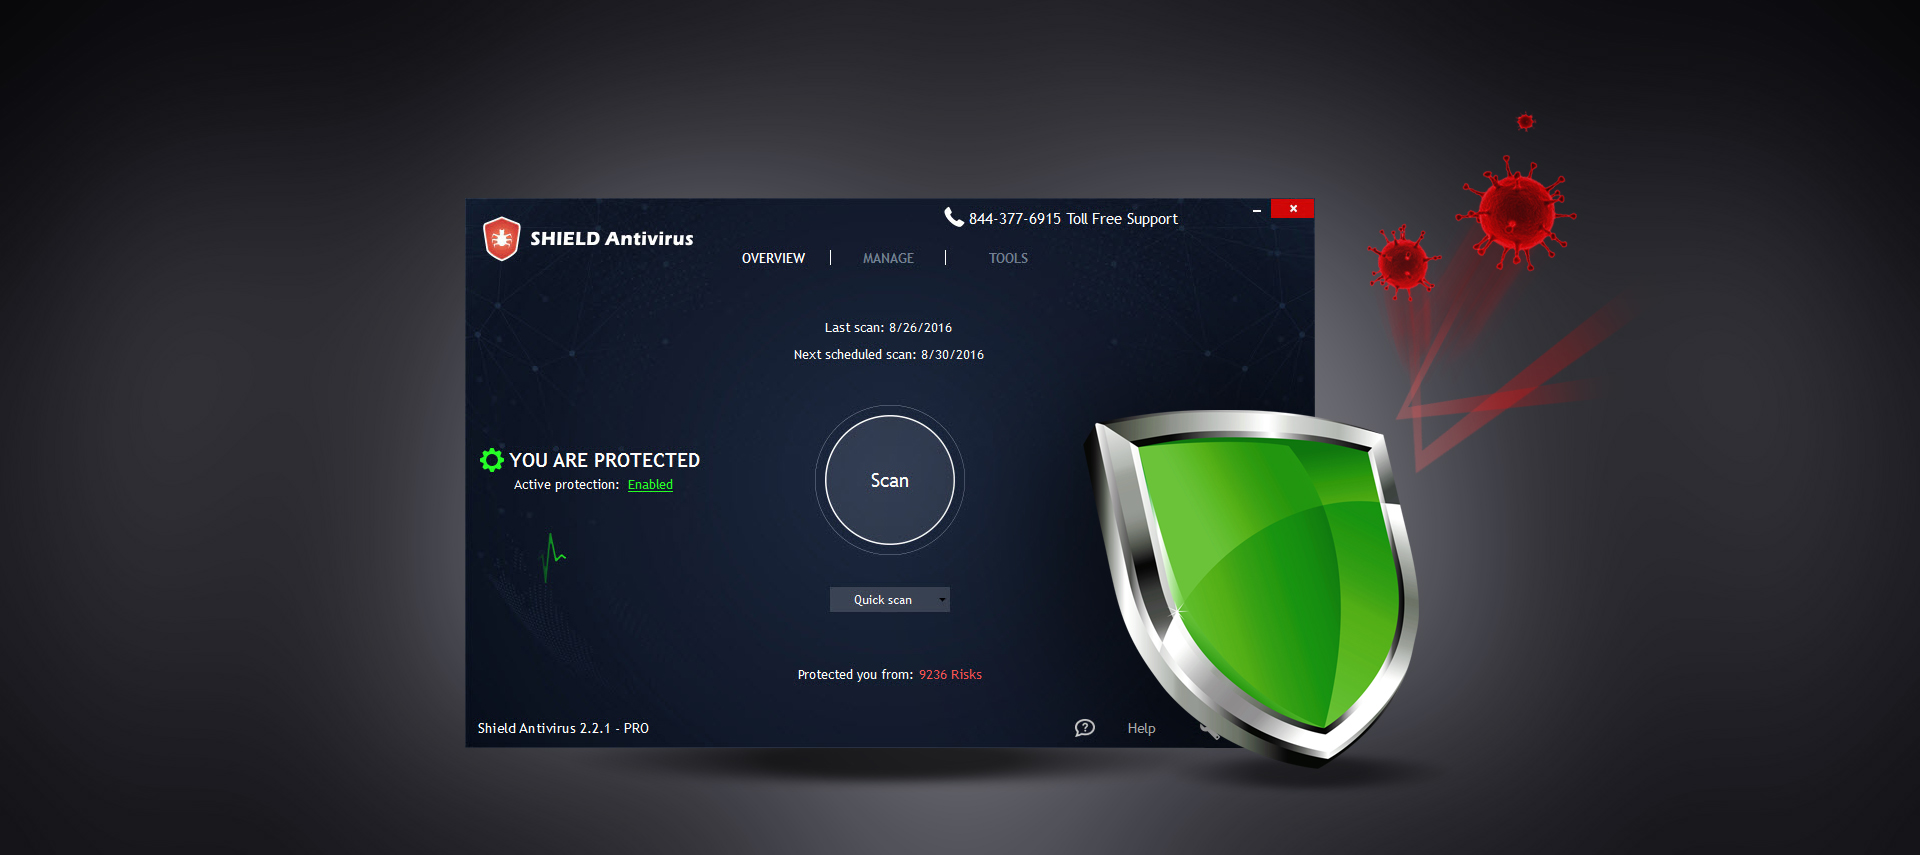 Shield Antivirus Pro 5.2.4 for apple download free